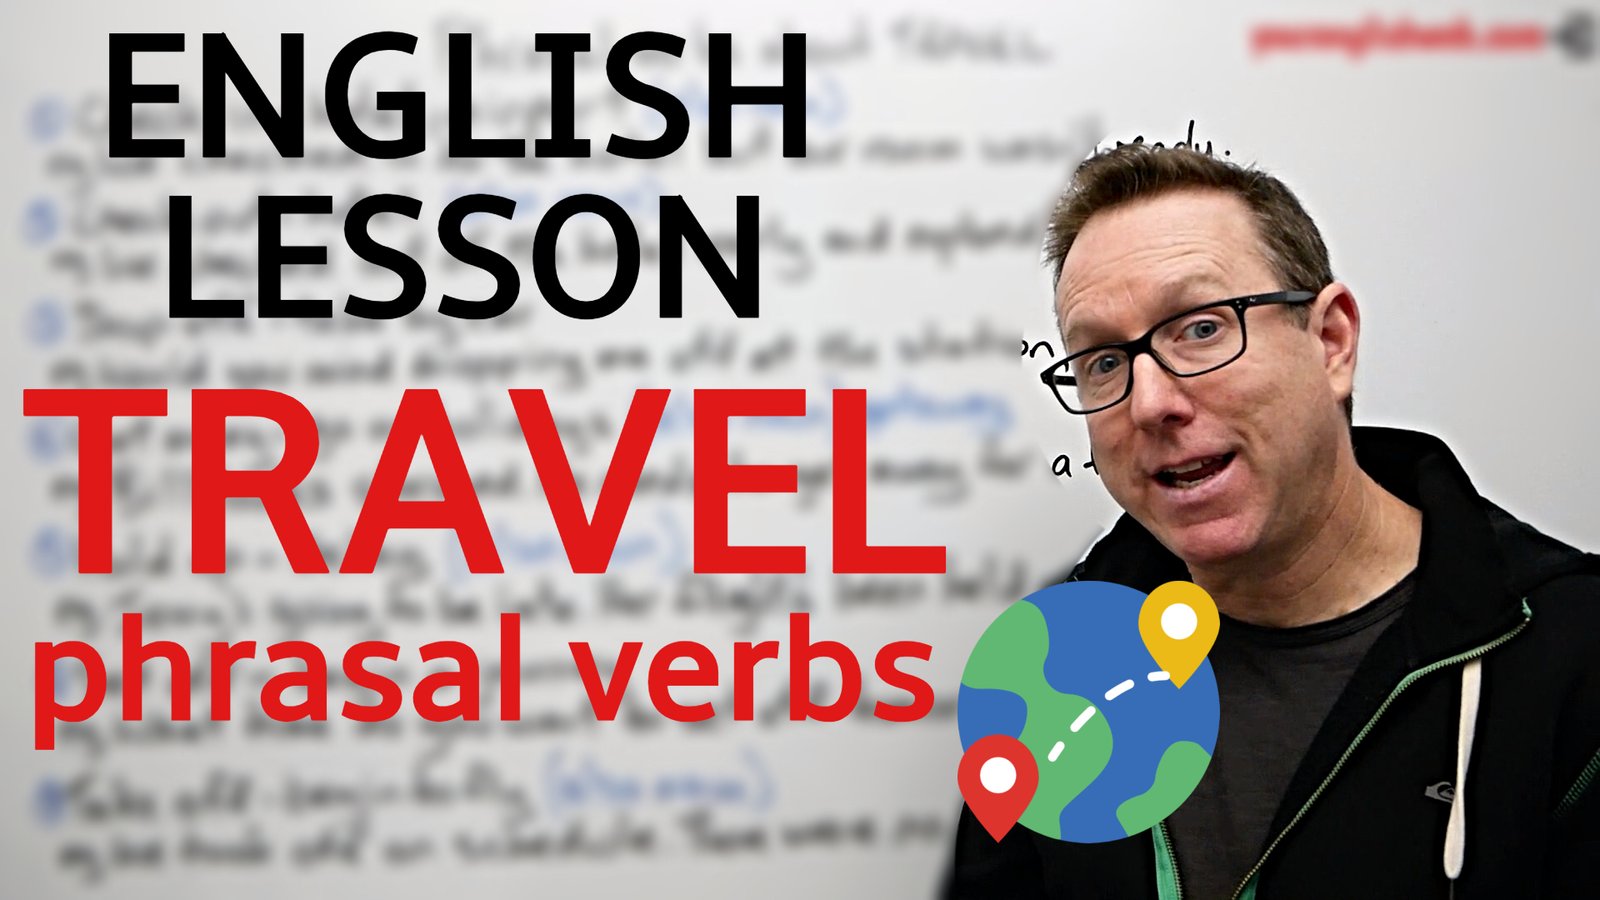 phrasal verbs for travel